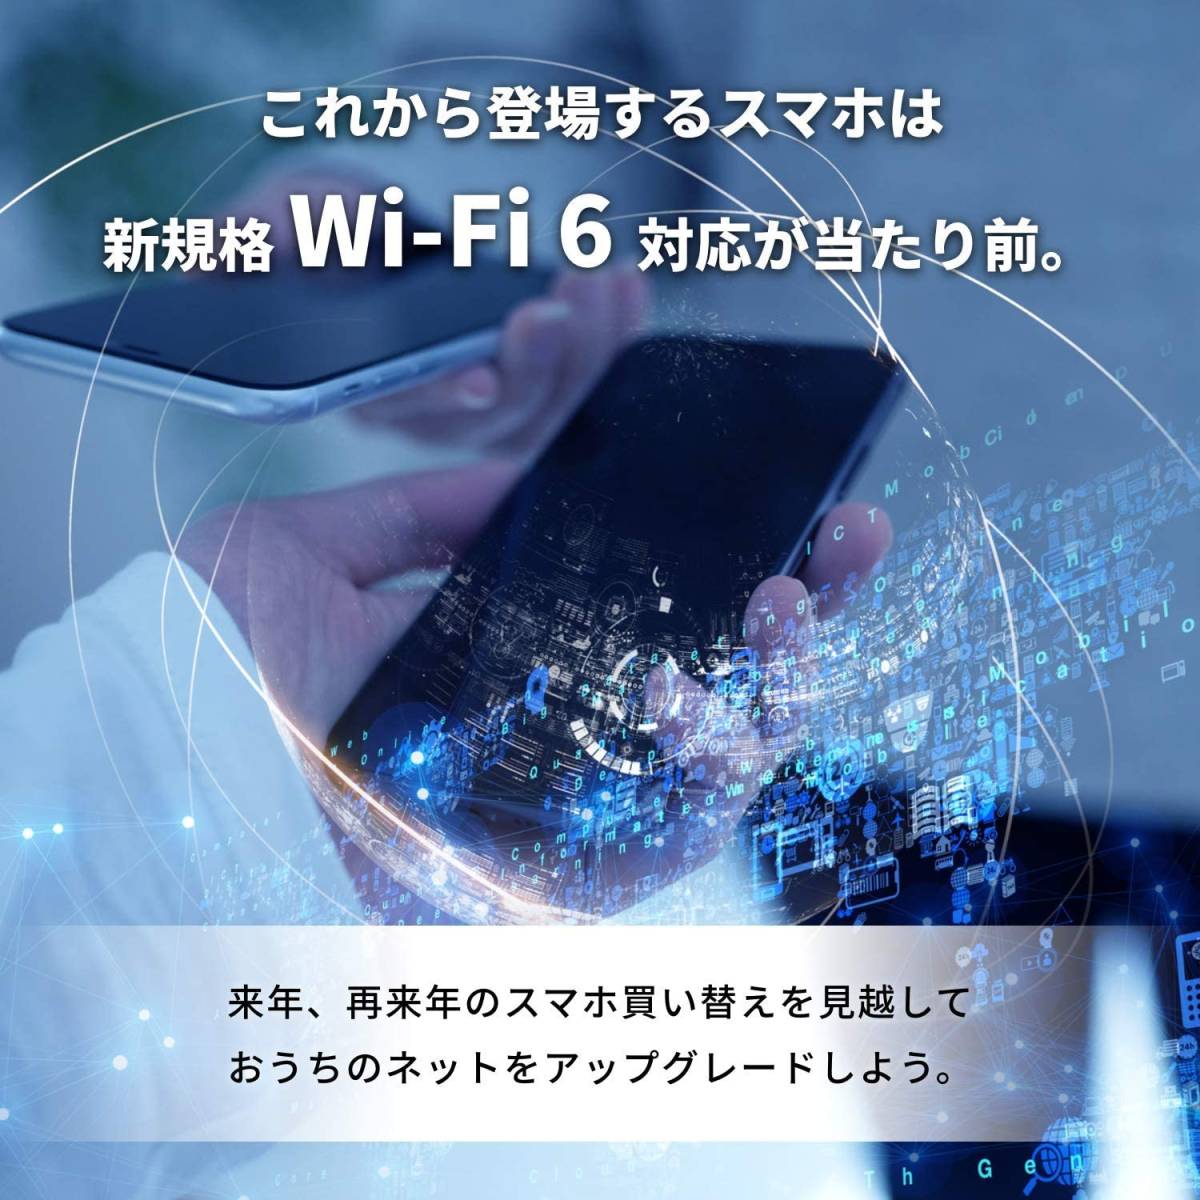 ●送料無料●美品●【 BUFFALO　無線LAN親機　WiFi ルーター　WSR-3200AX4S-BK　ブラック 】 最新規格 Wi-Fi 6（11ax）対応　2401+800Mbps